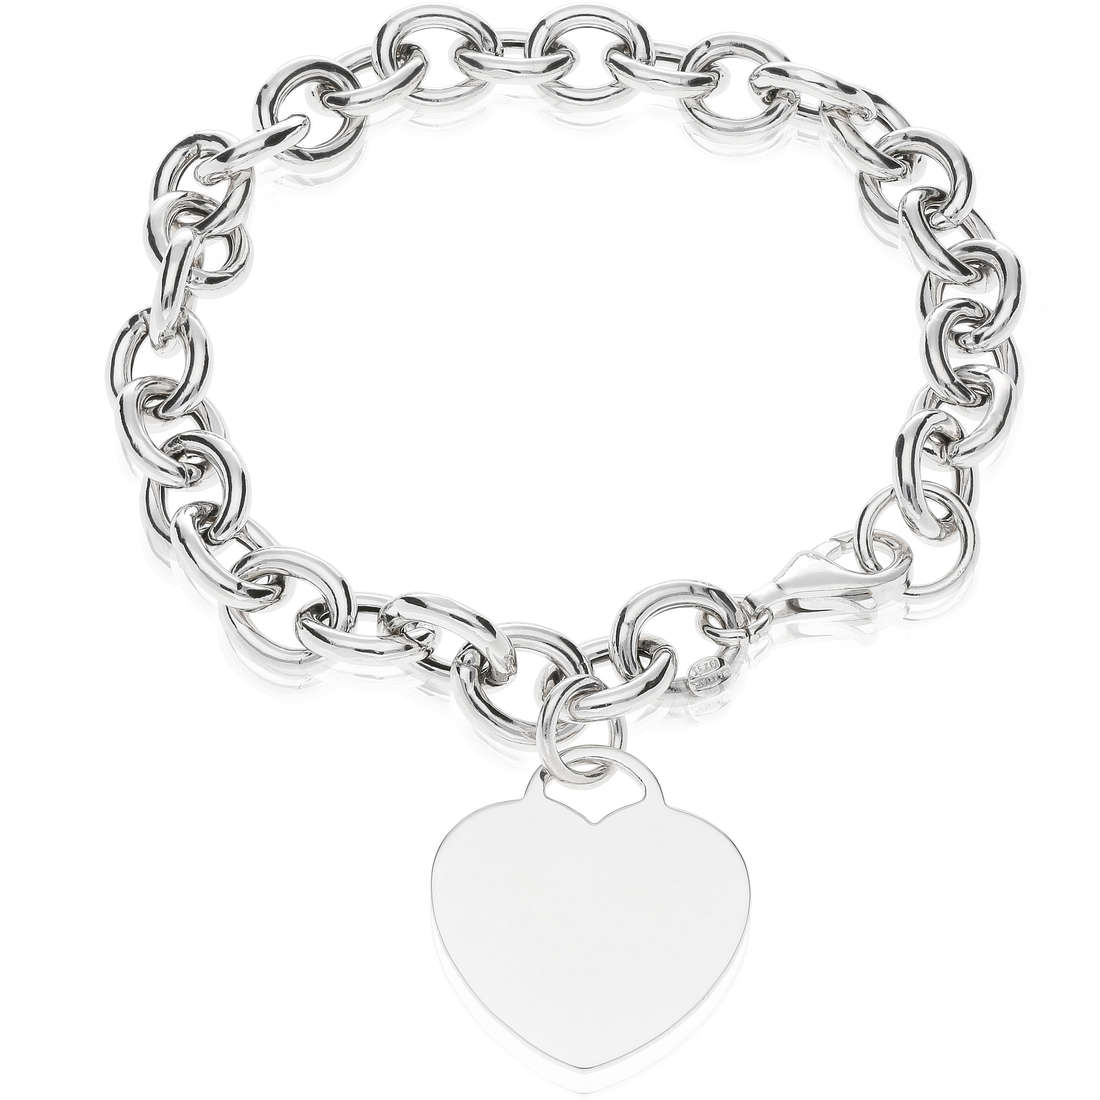 bracelet woman Chain 925 Silver jewel GioiaPura WBM01306LL